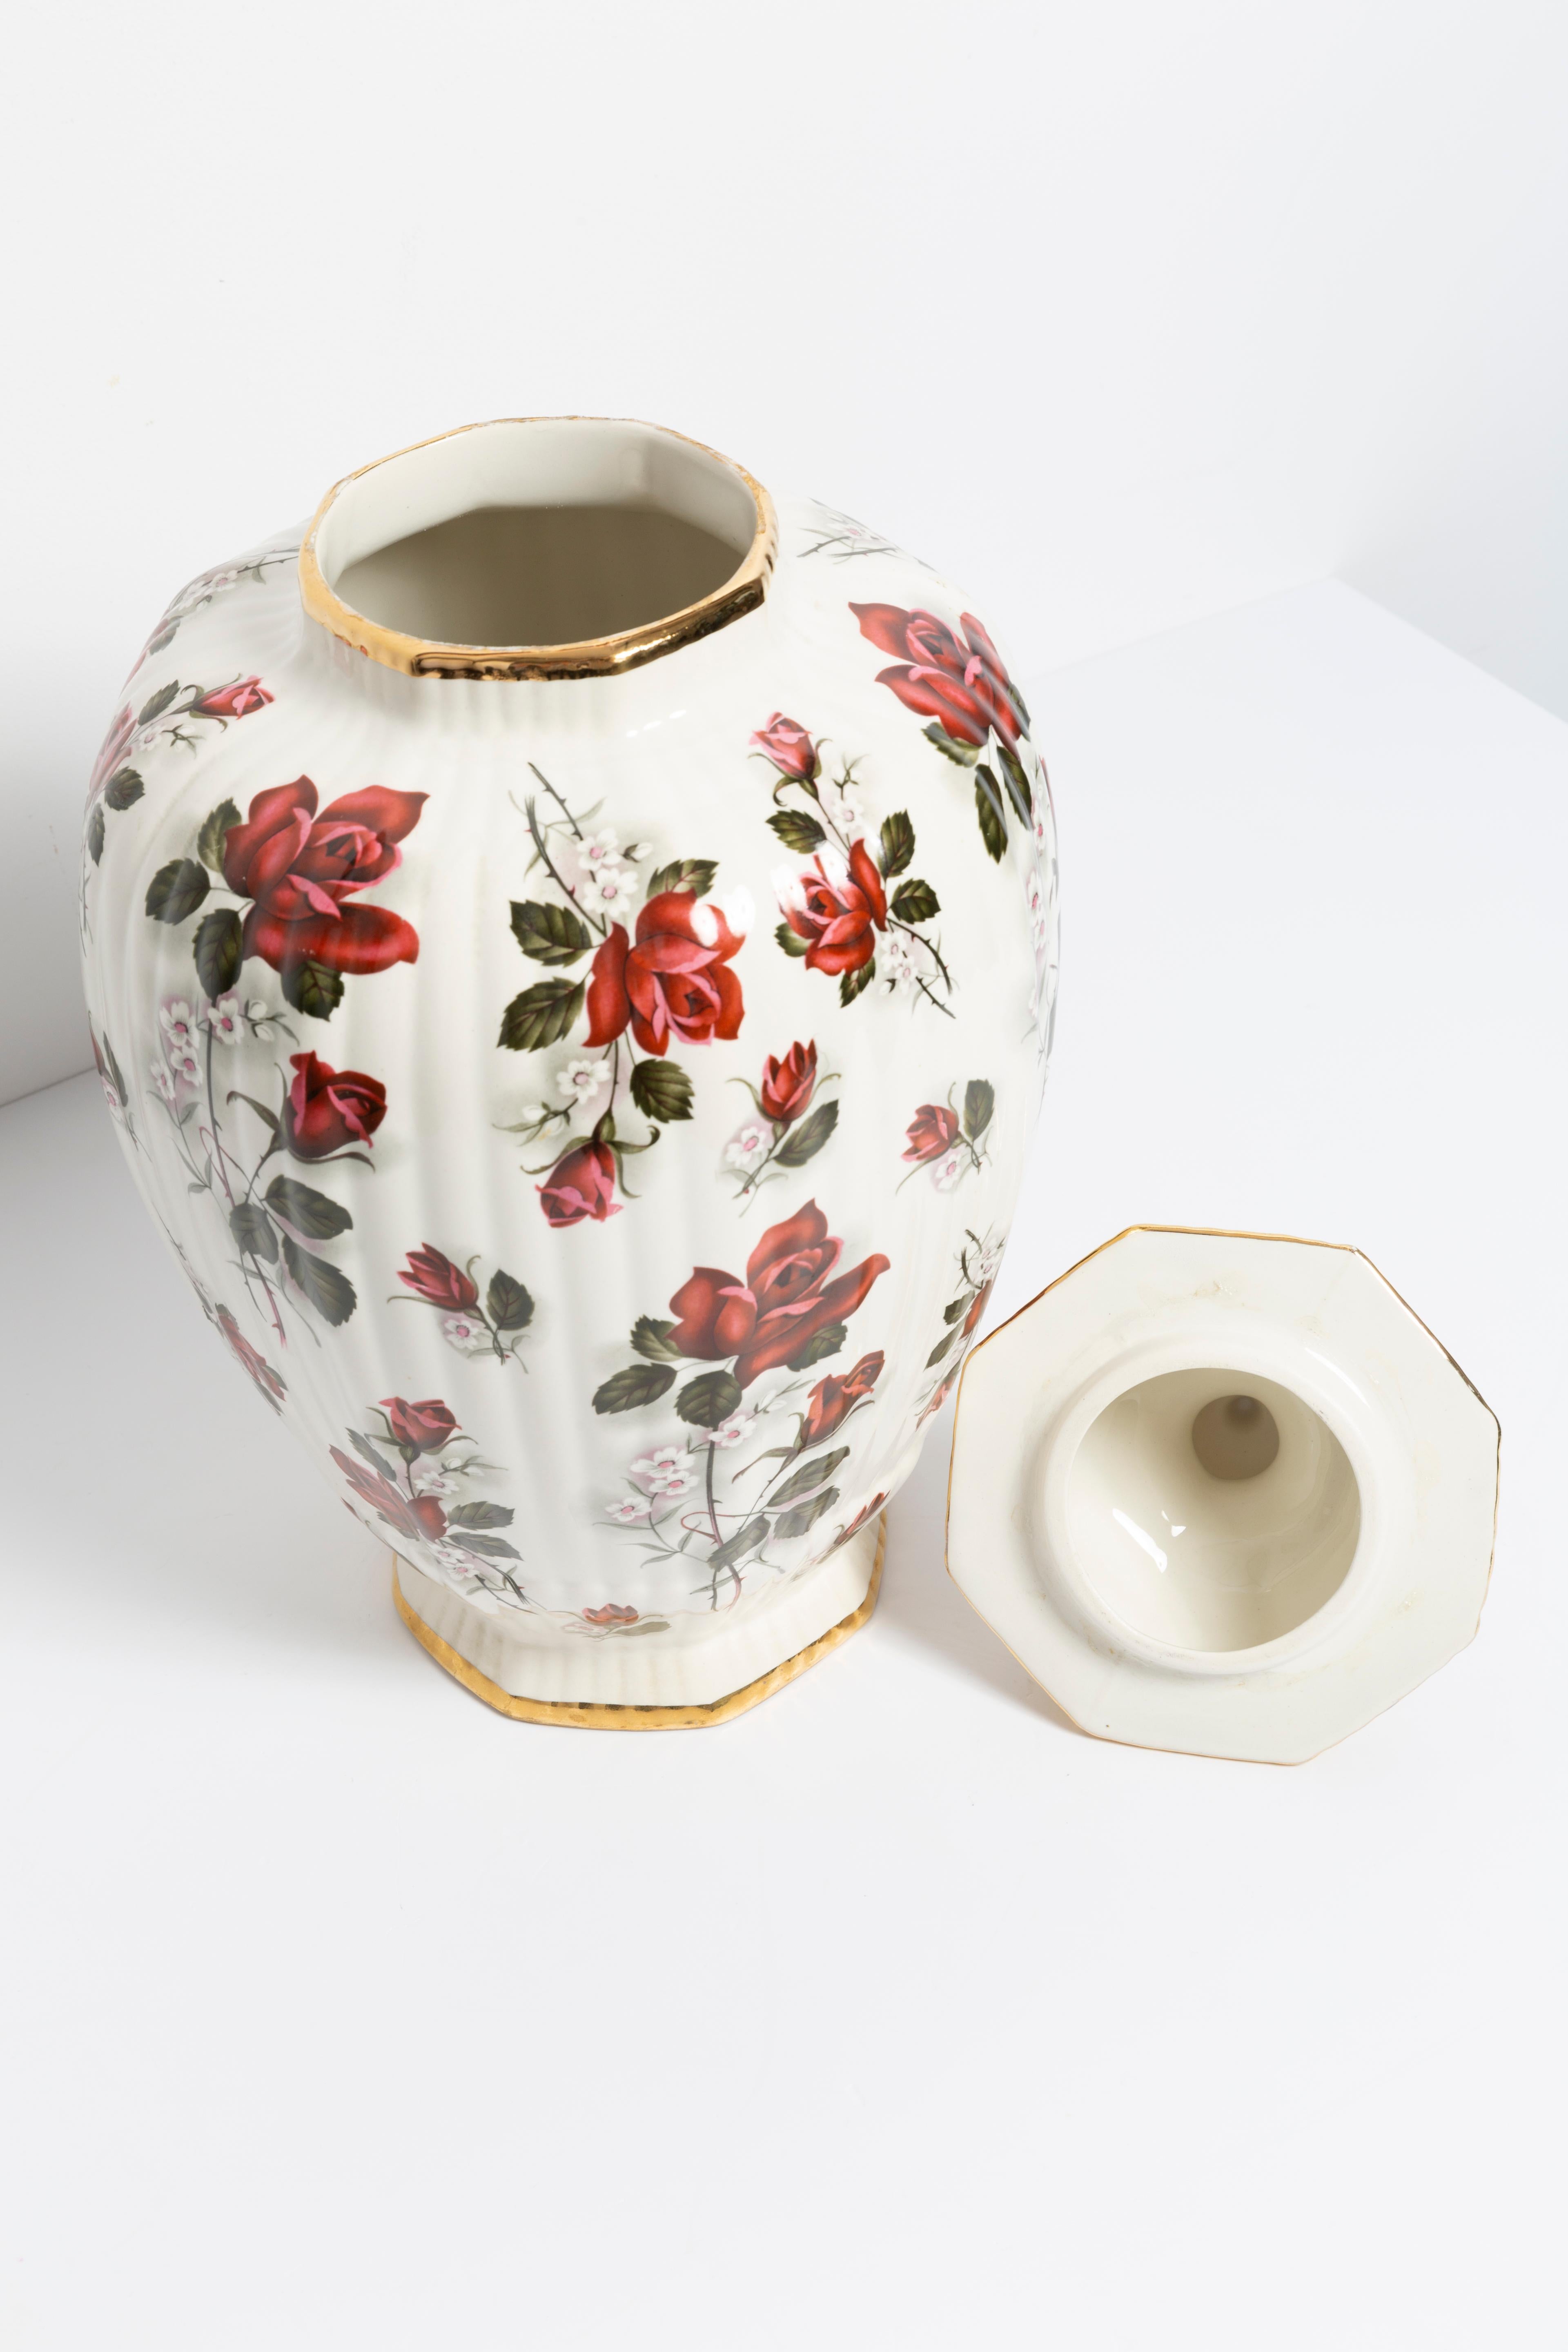 Big Ceramic Hand Painted Roses Vase Candy Box, 20th Century, Belgium, 1960s For Sale 2